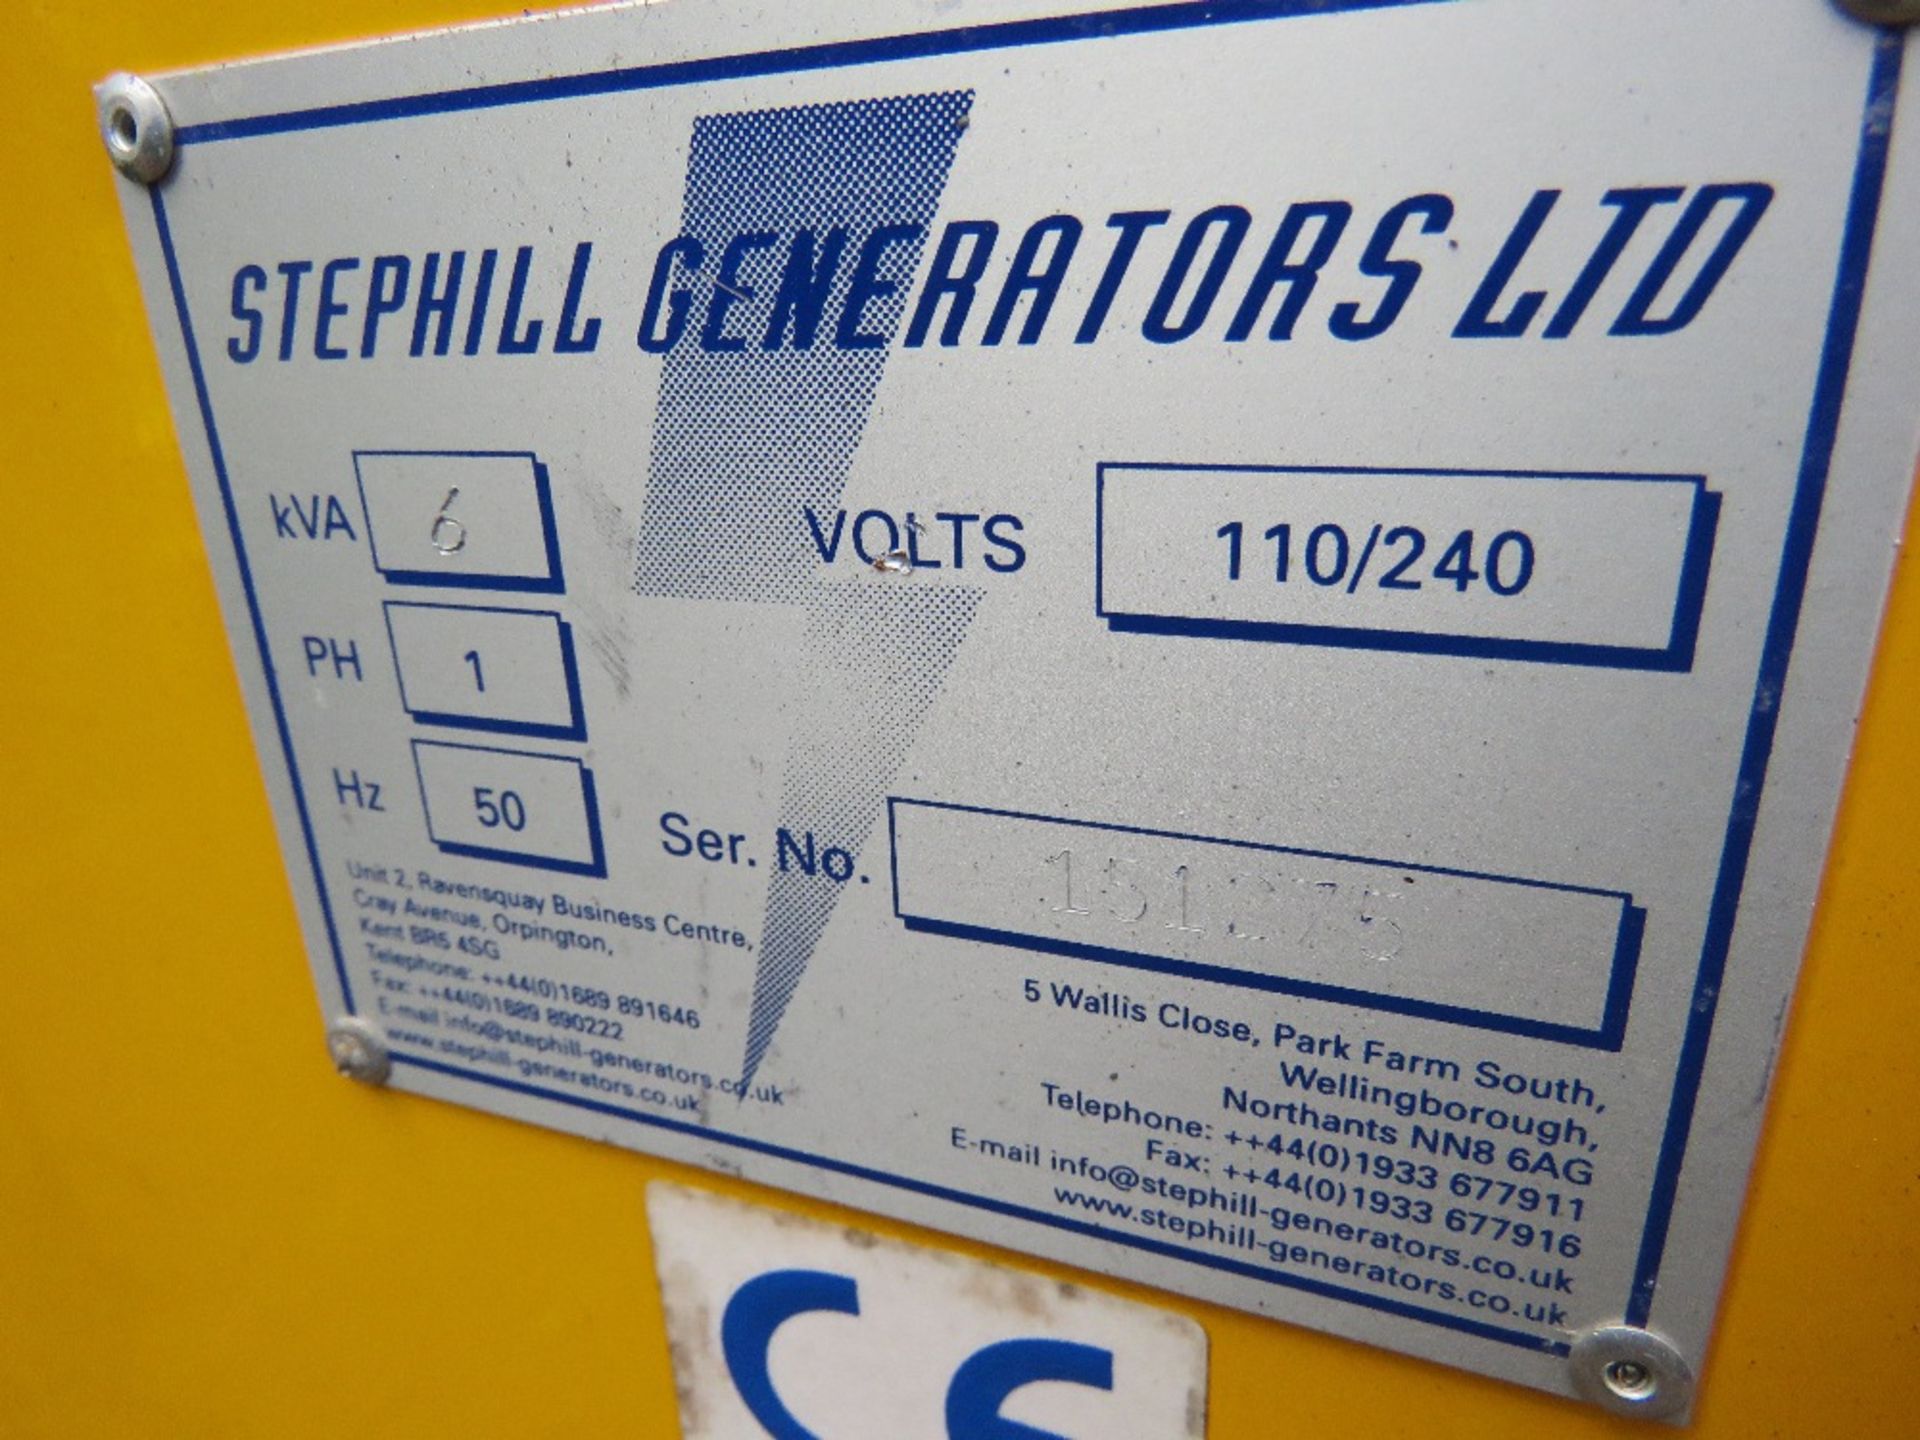 STEPHILL SSP6000 PETROL ENGINED GENERATOR. - Image 2 of 4